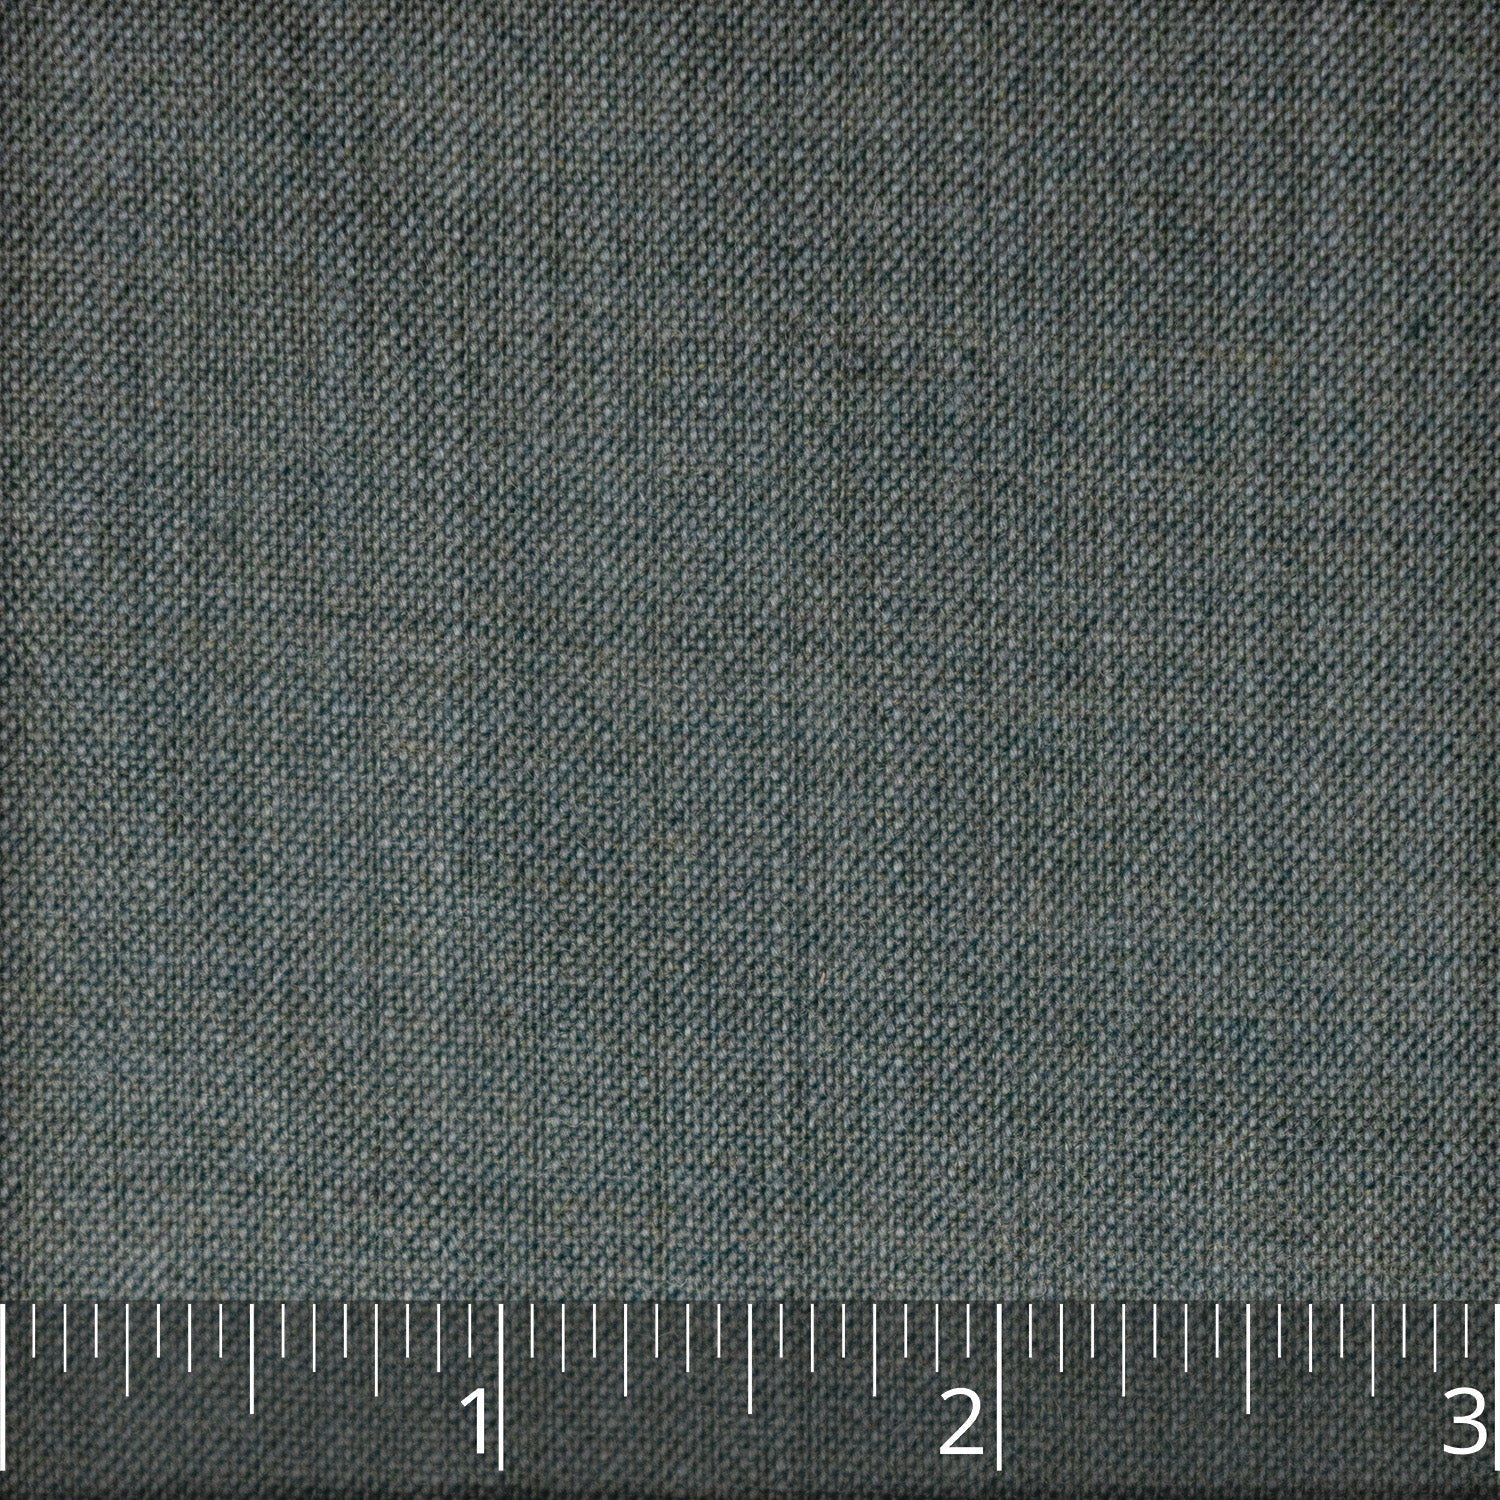 Soft Saxon Blue Worsted Wool Stuff - $16.00 yd. - Burnley & Trowbridge Co.